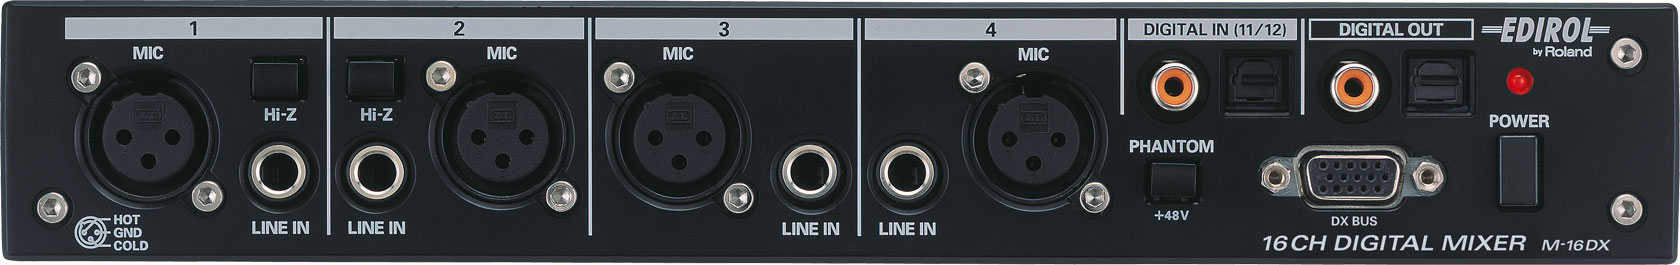 Roland - M-16DX | 16-Channel Digital Mixer